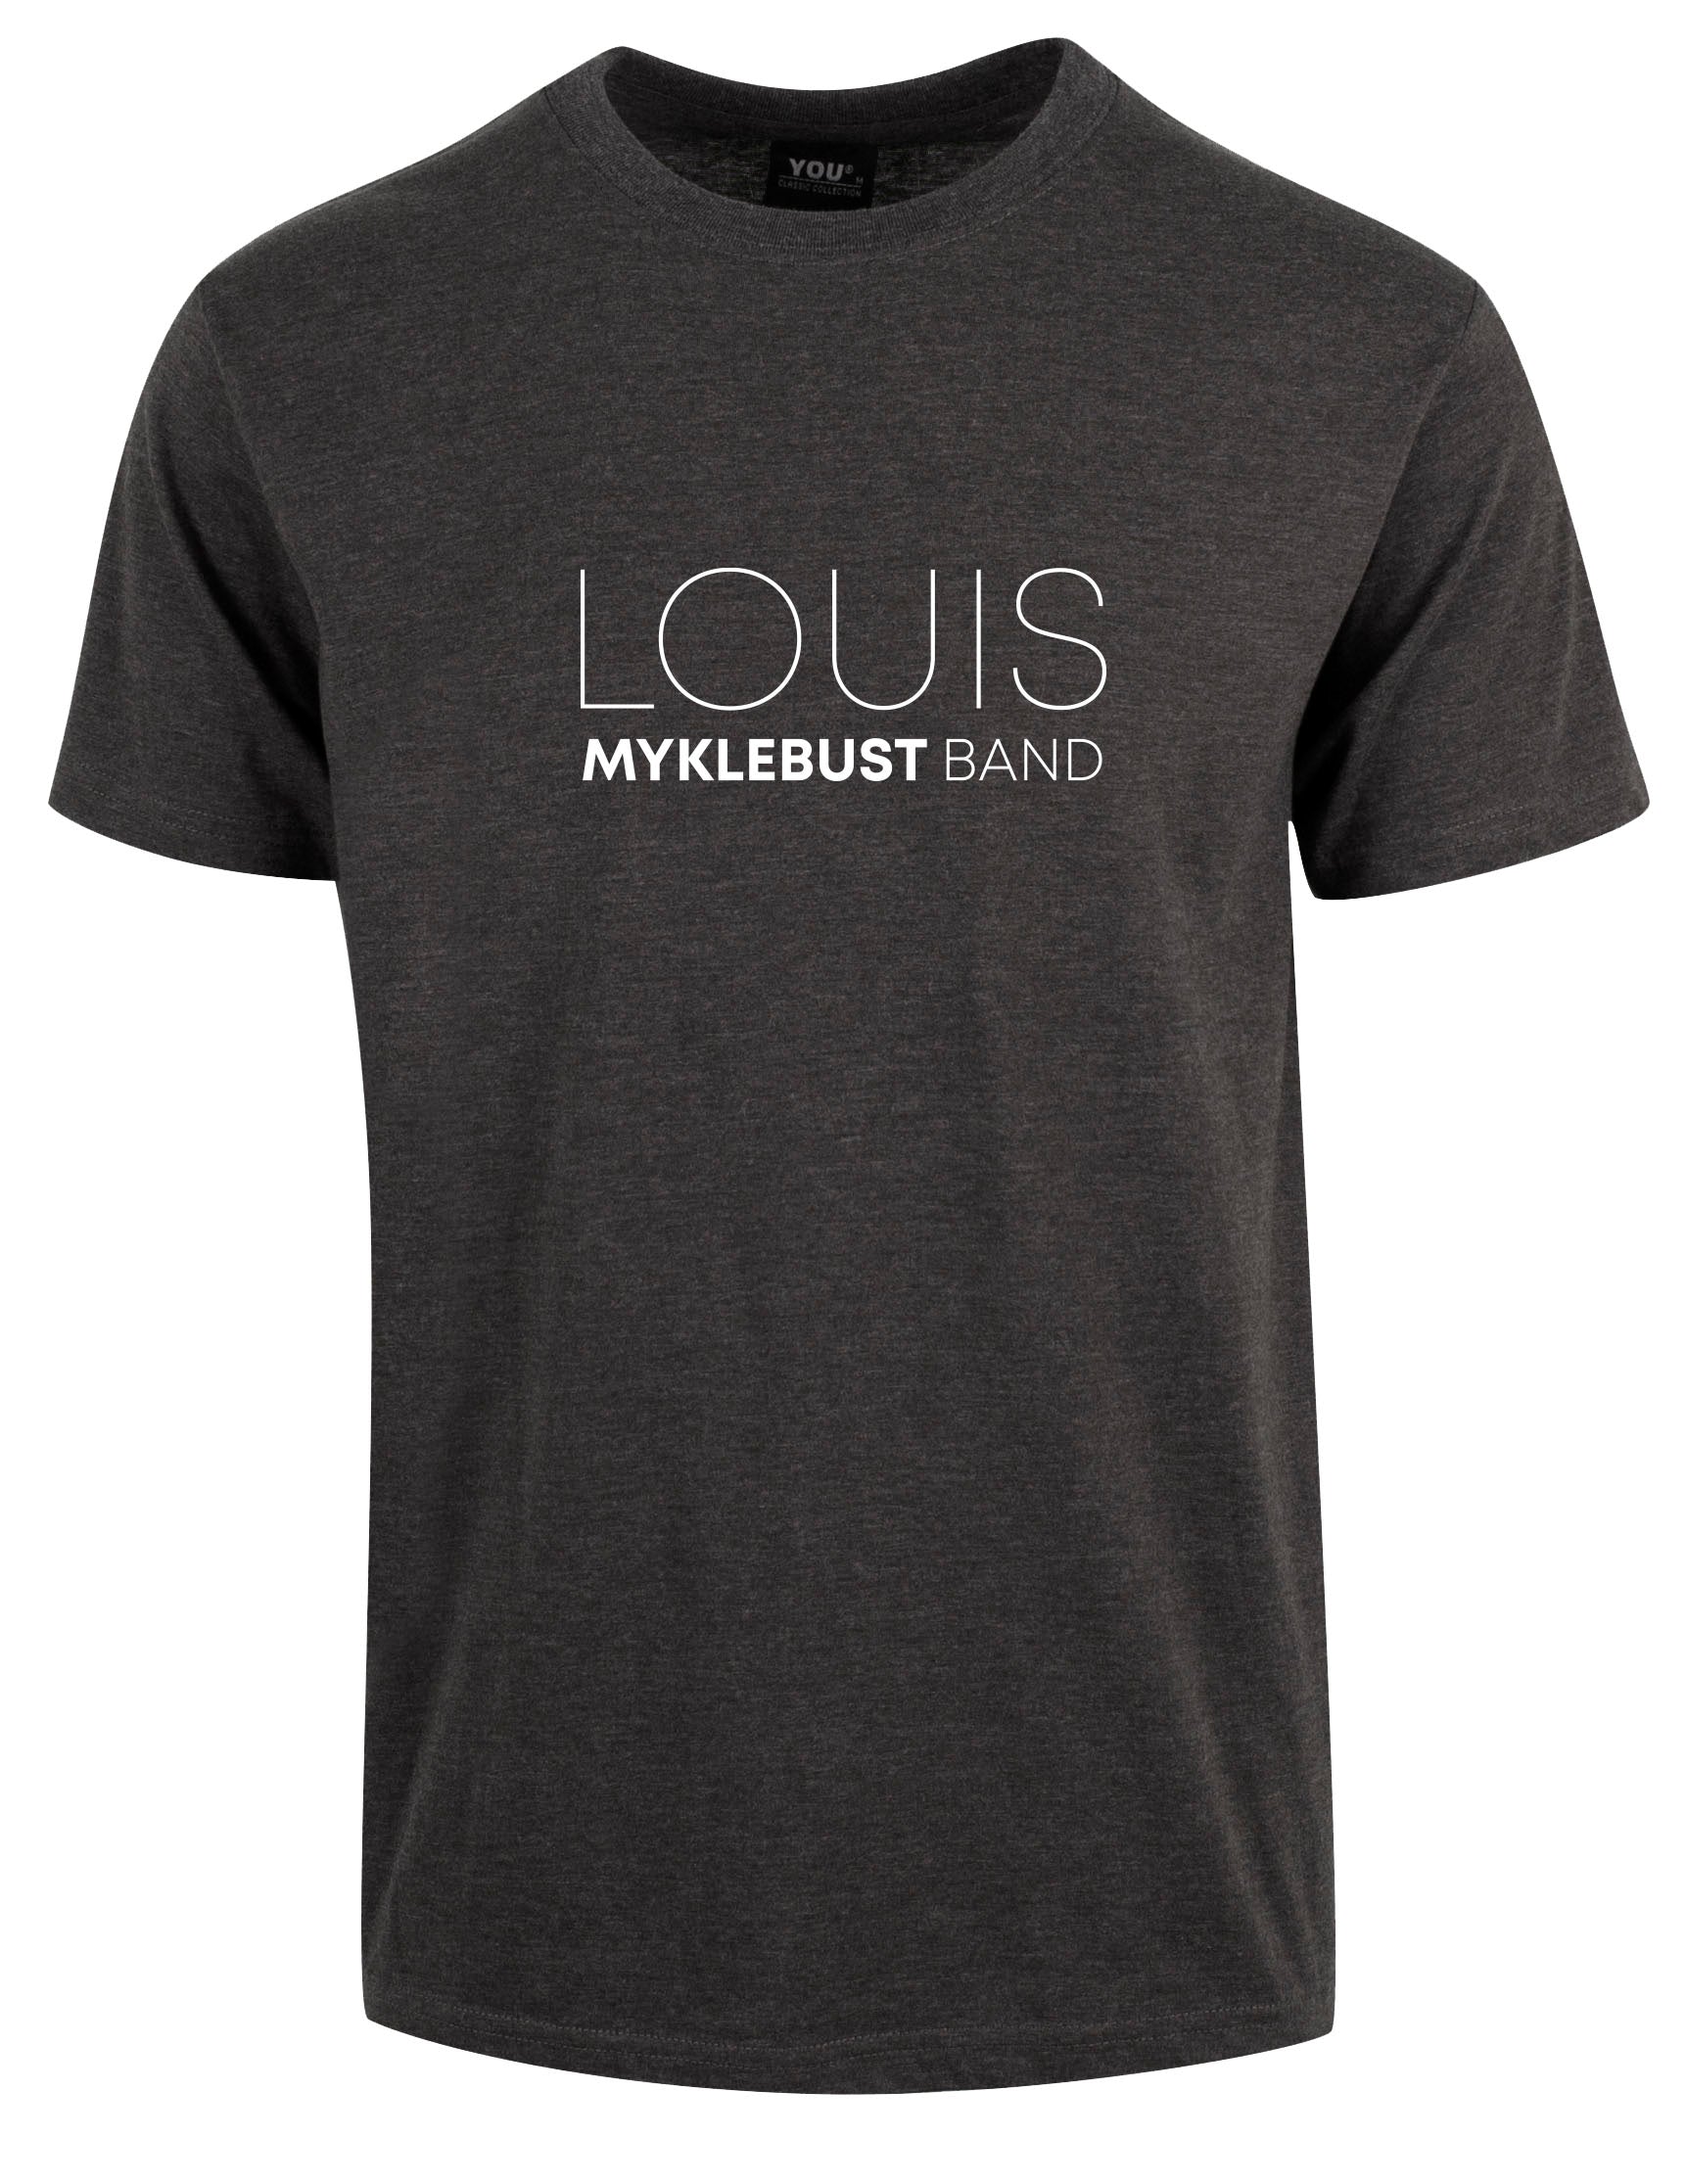 Louis Band koks